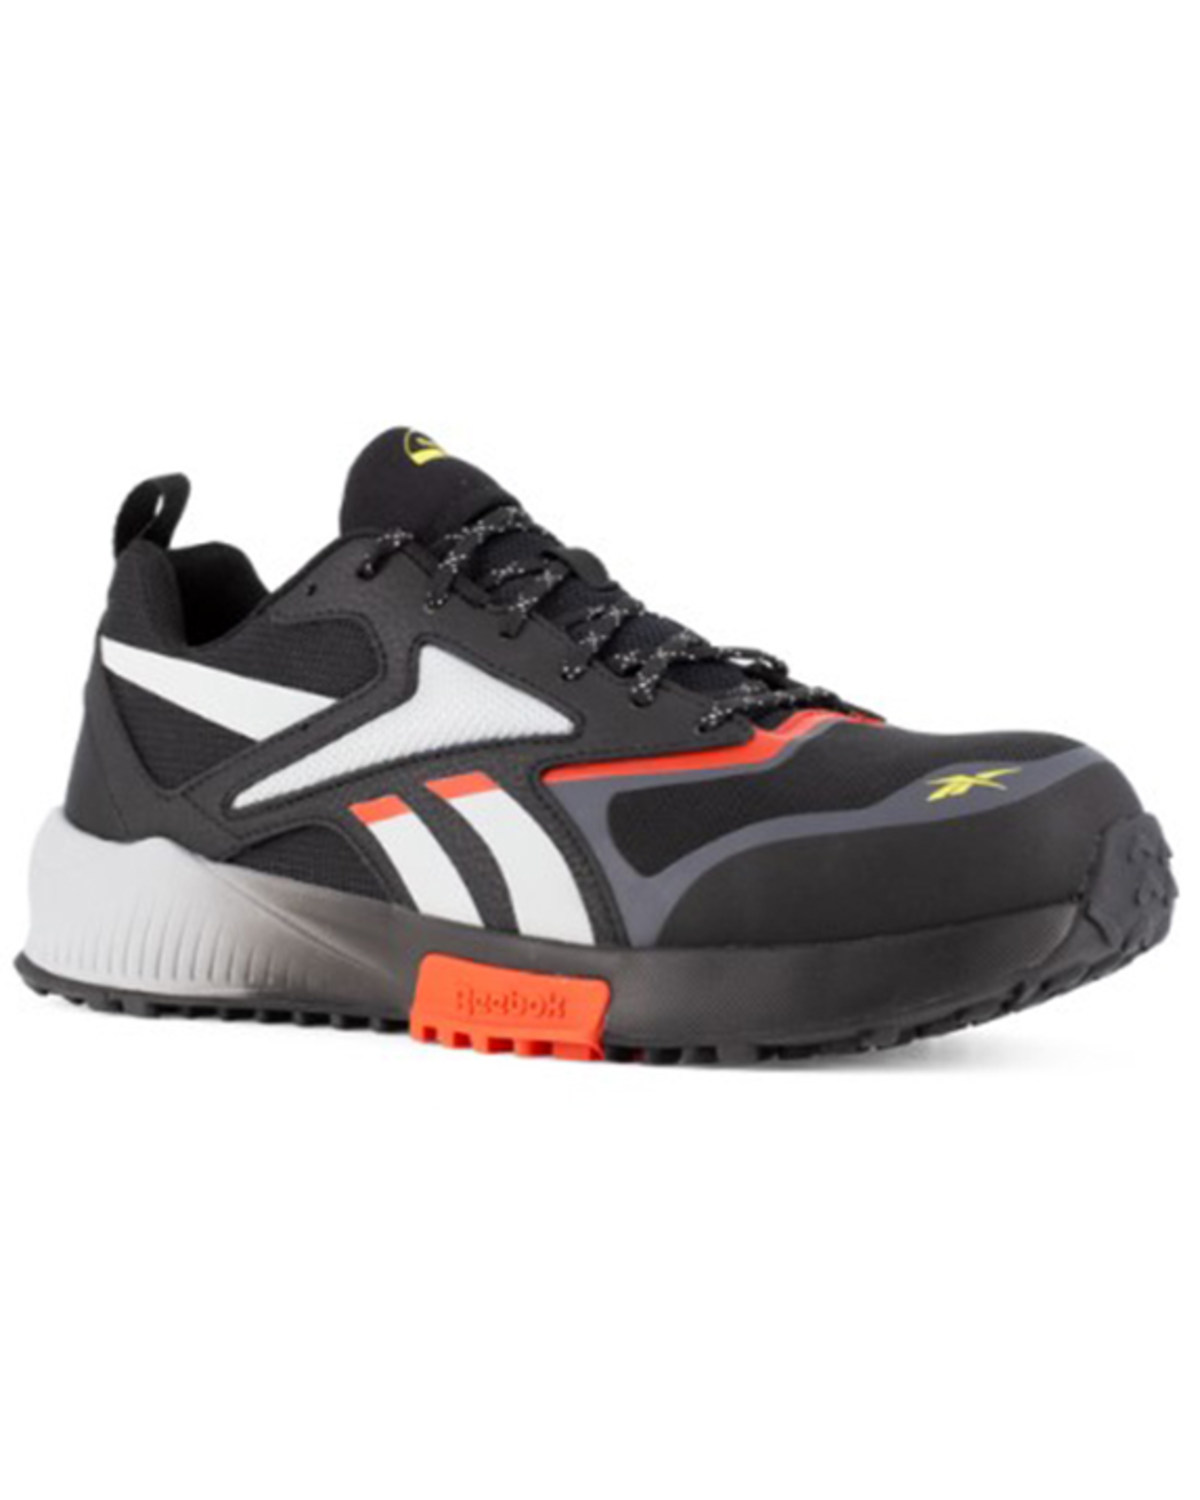 Reebok Men's Lavante Triail 2 Running Work Shoes - Composite Toe